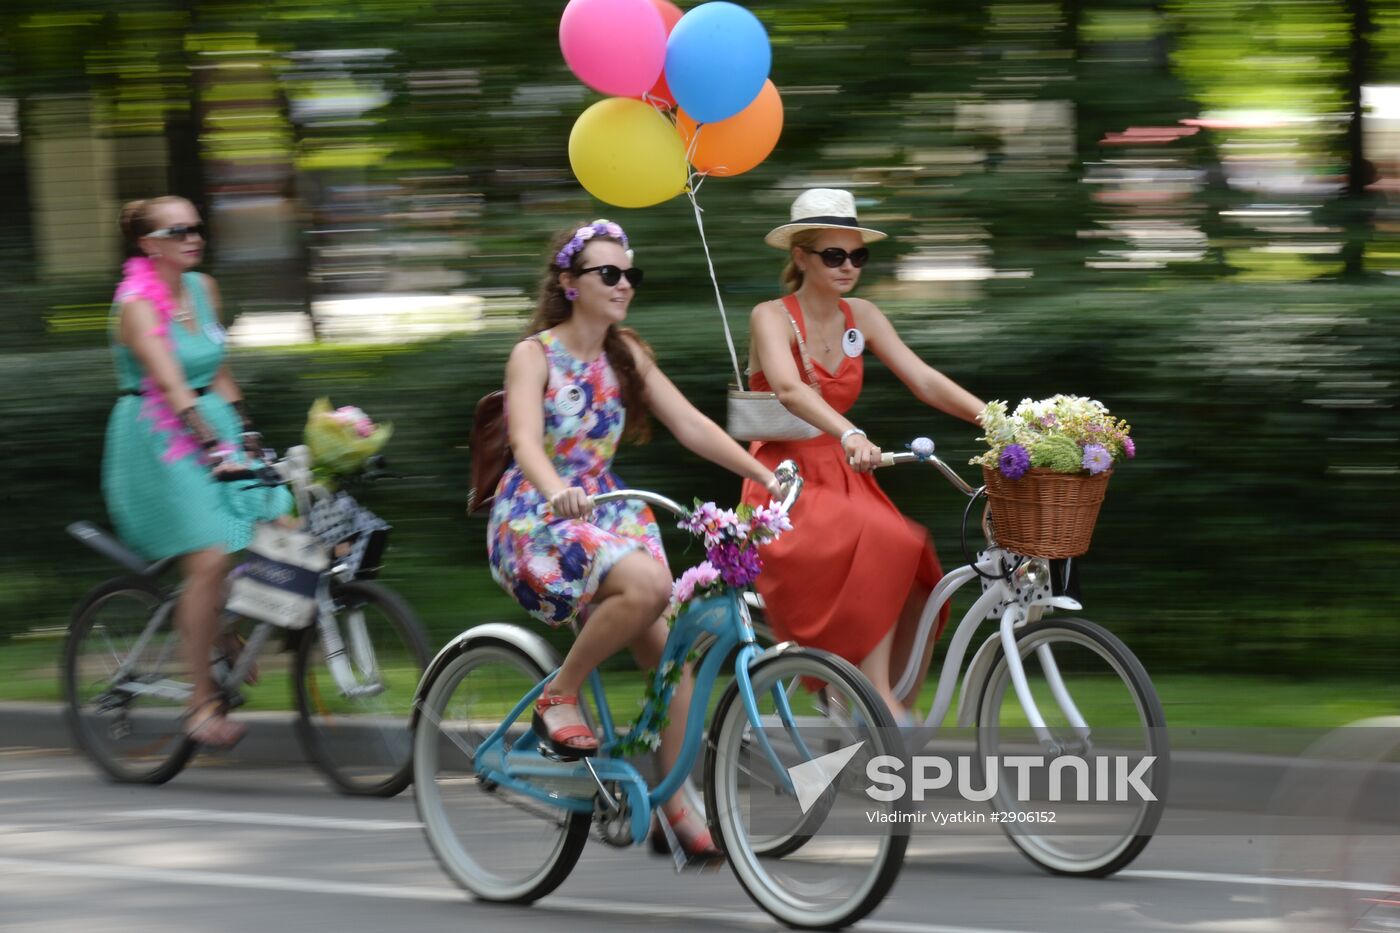 Lady on a Bike cycling parade